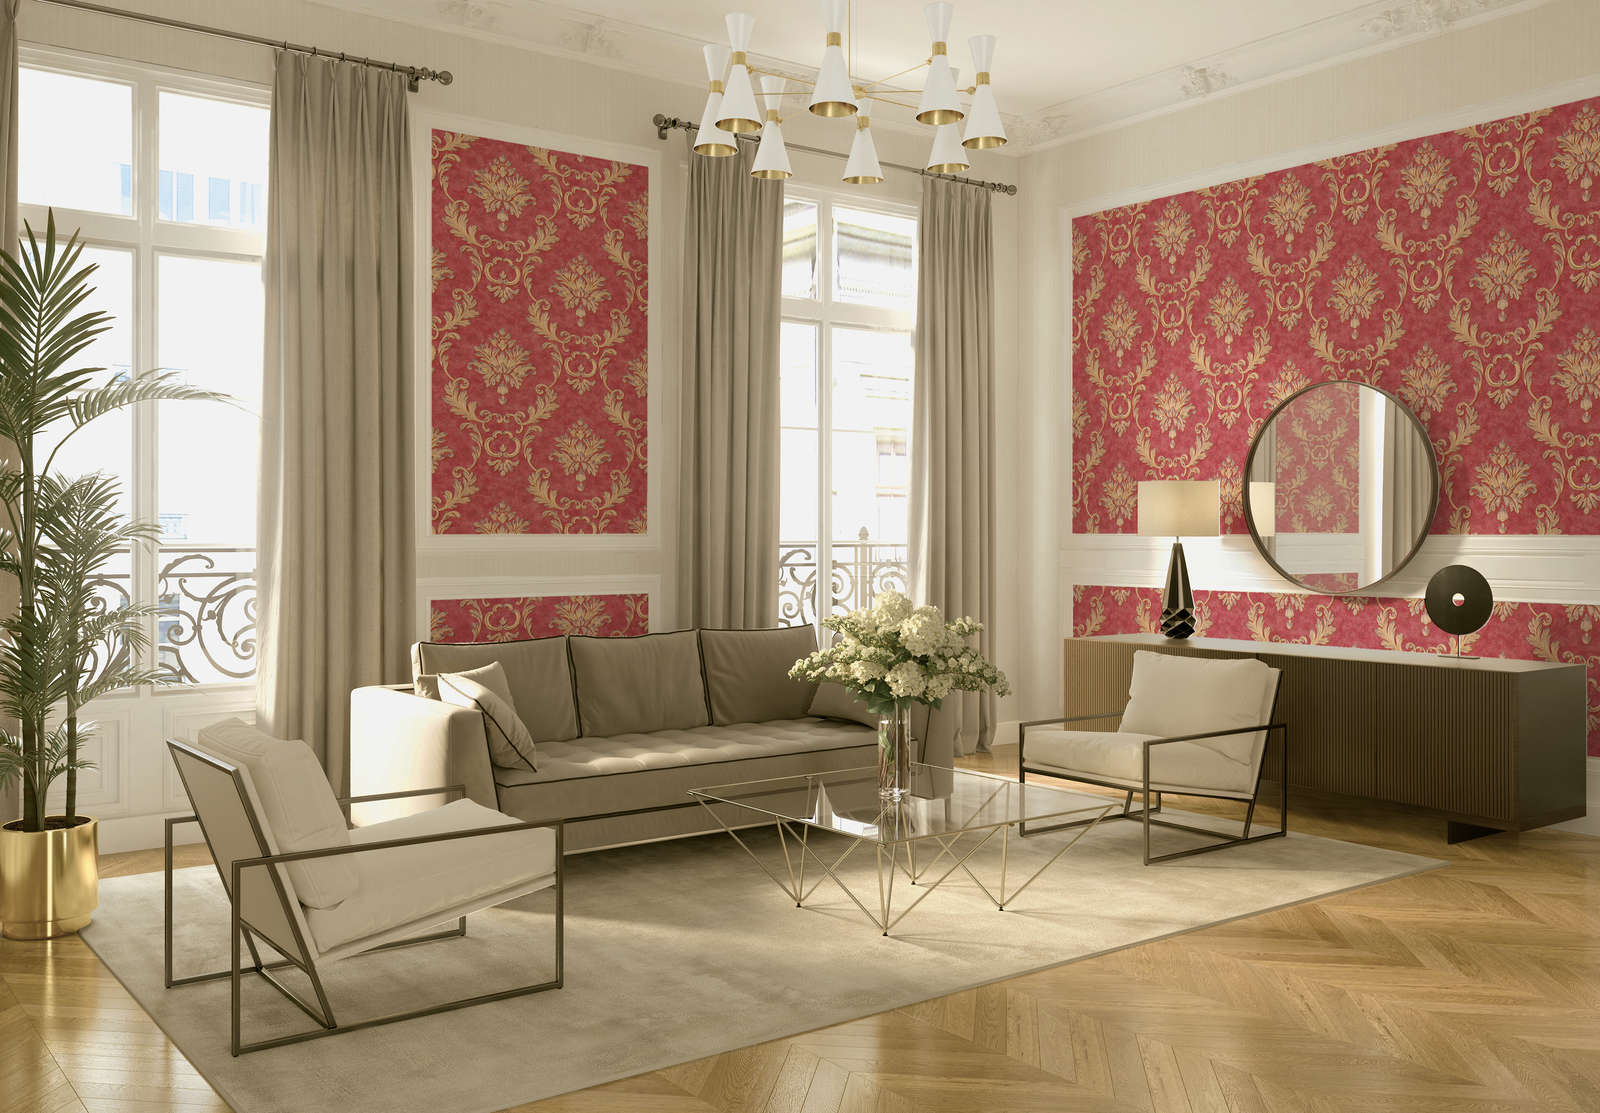             Designer wallpaper floral ornaments & metallic effect - red, gold
        